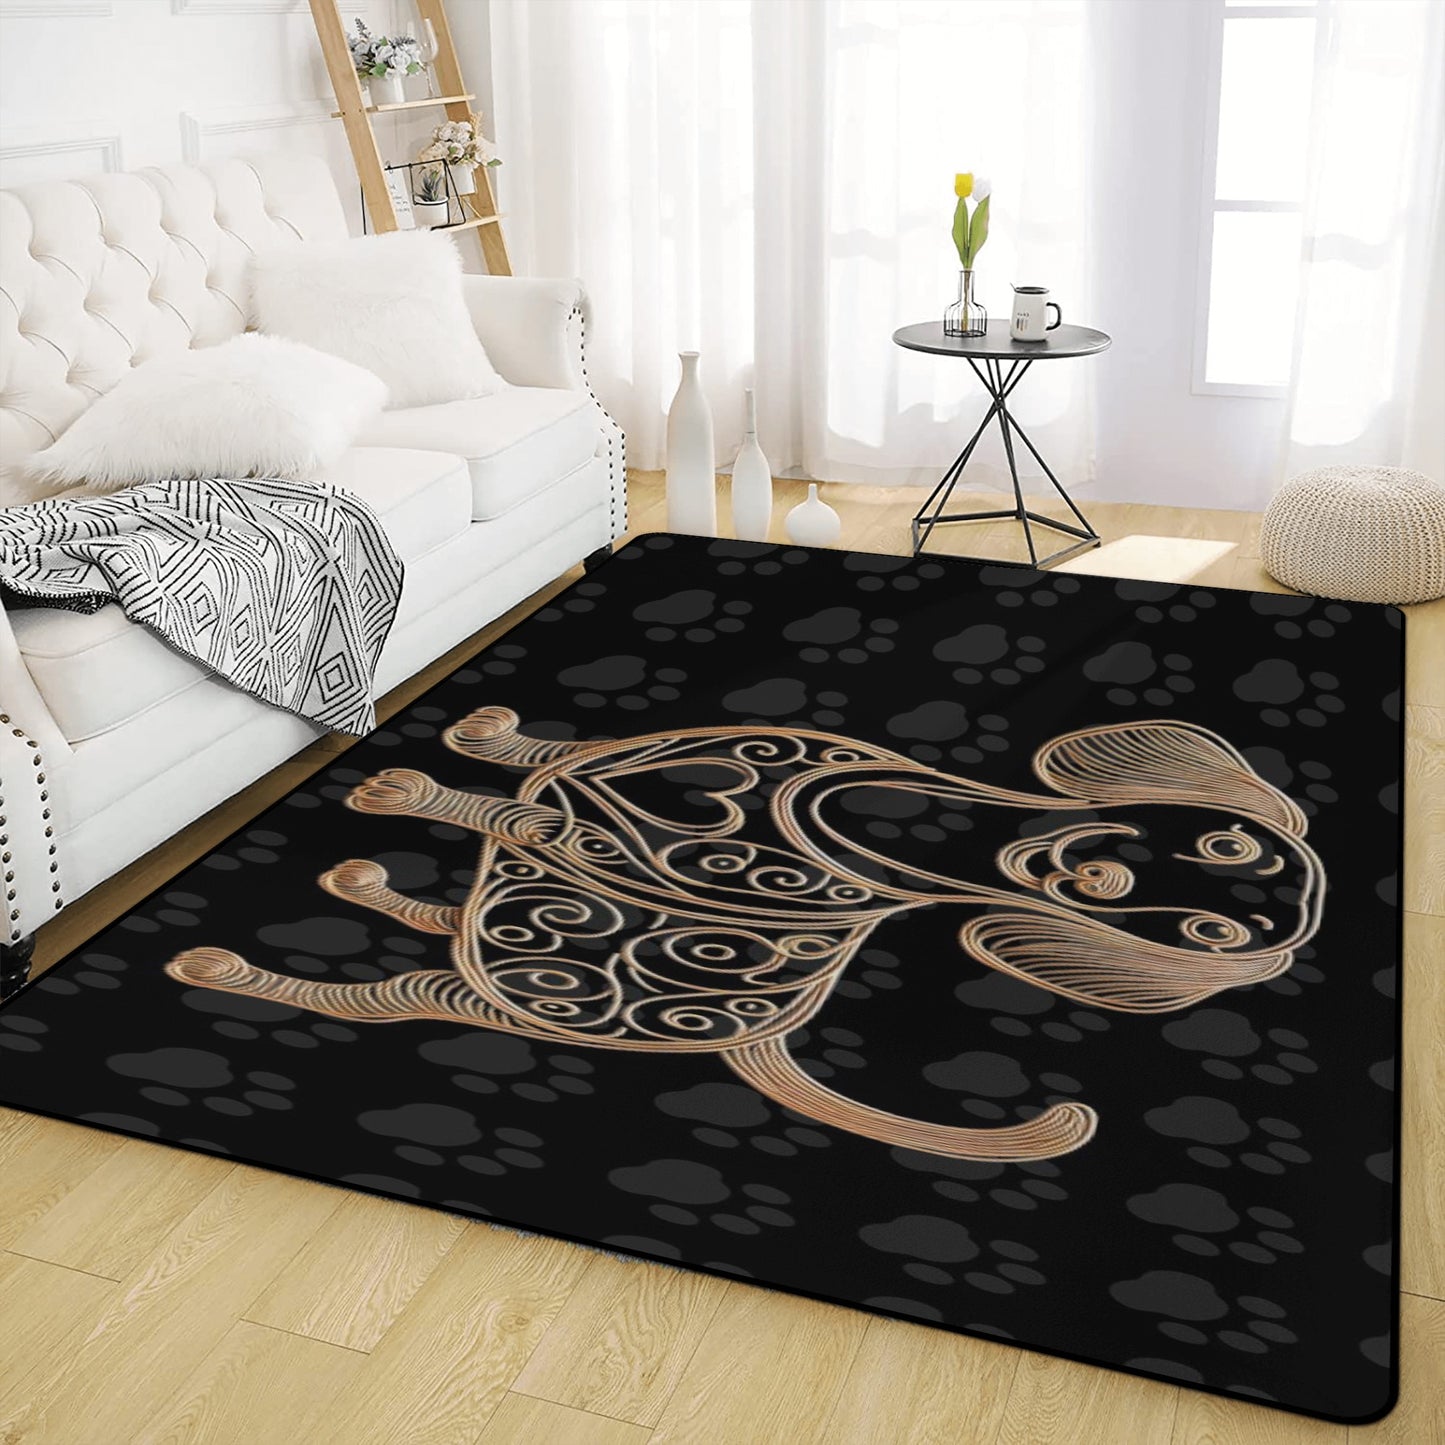 Wilma - Living Room Carpet Rug